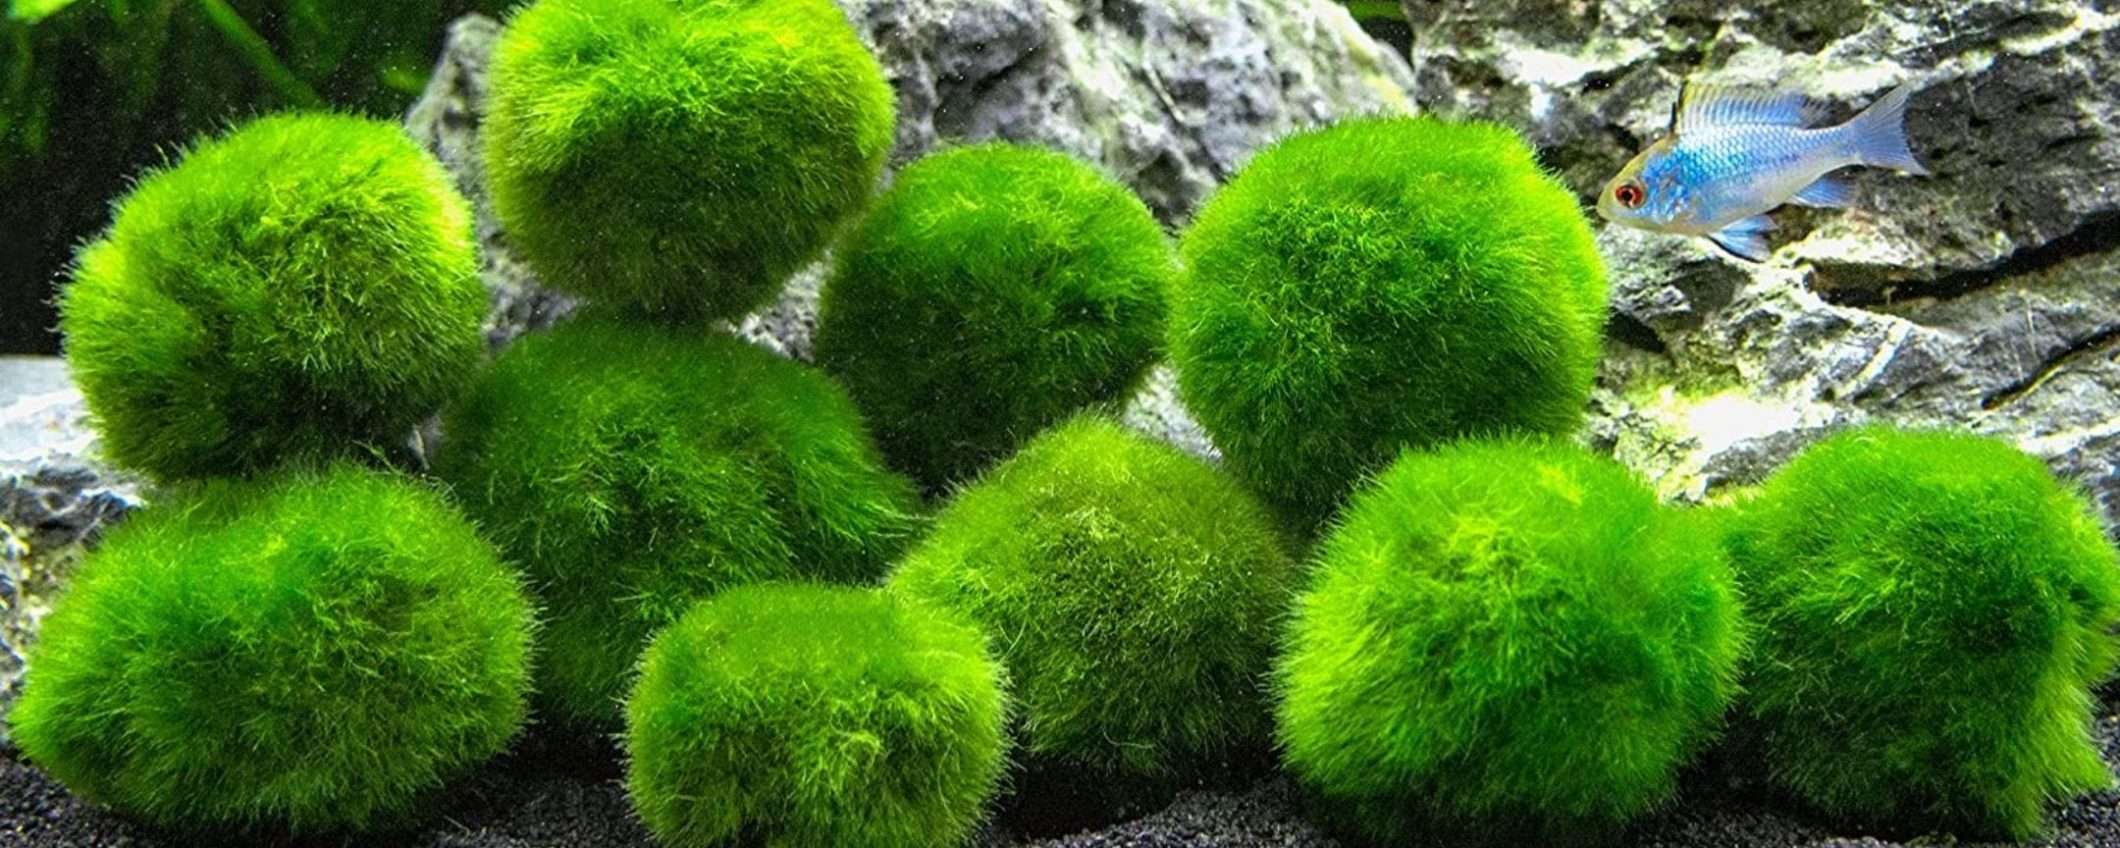 Alga comanda un robot grazie alla Fotosintesi